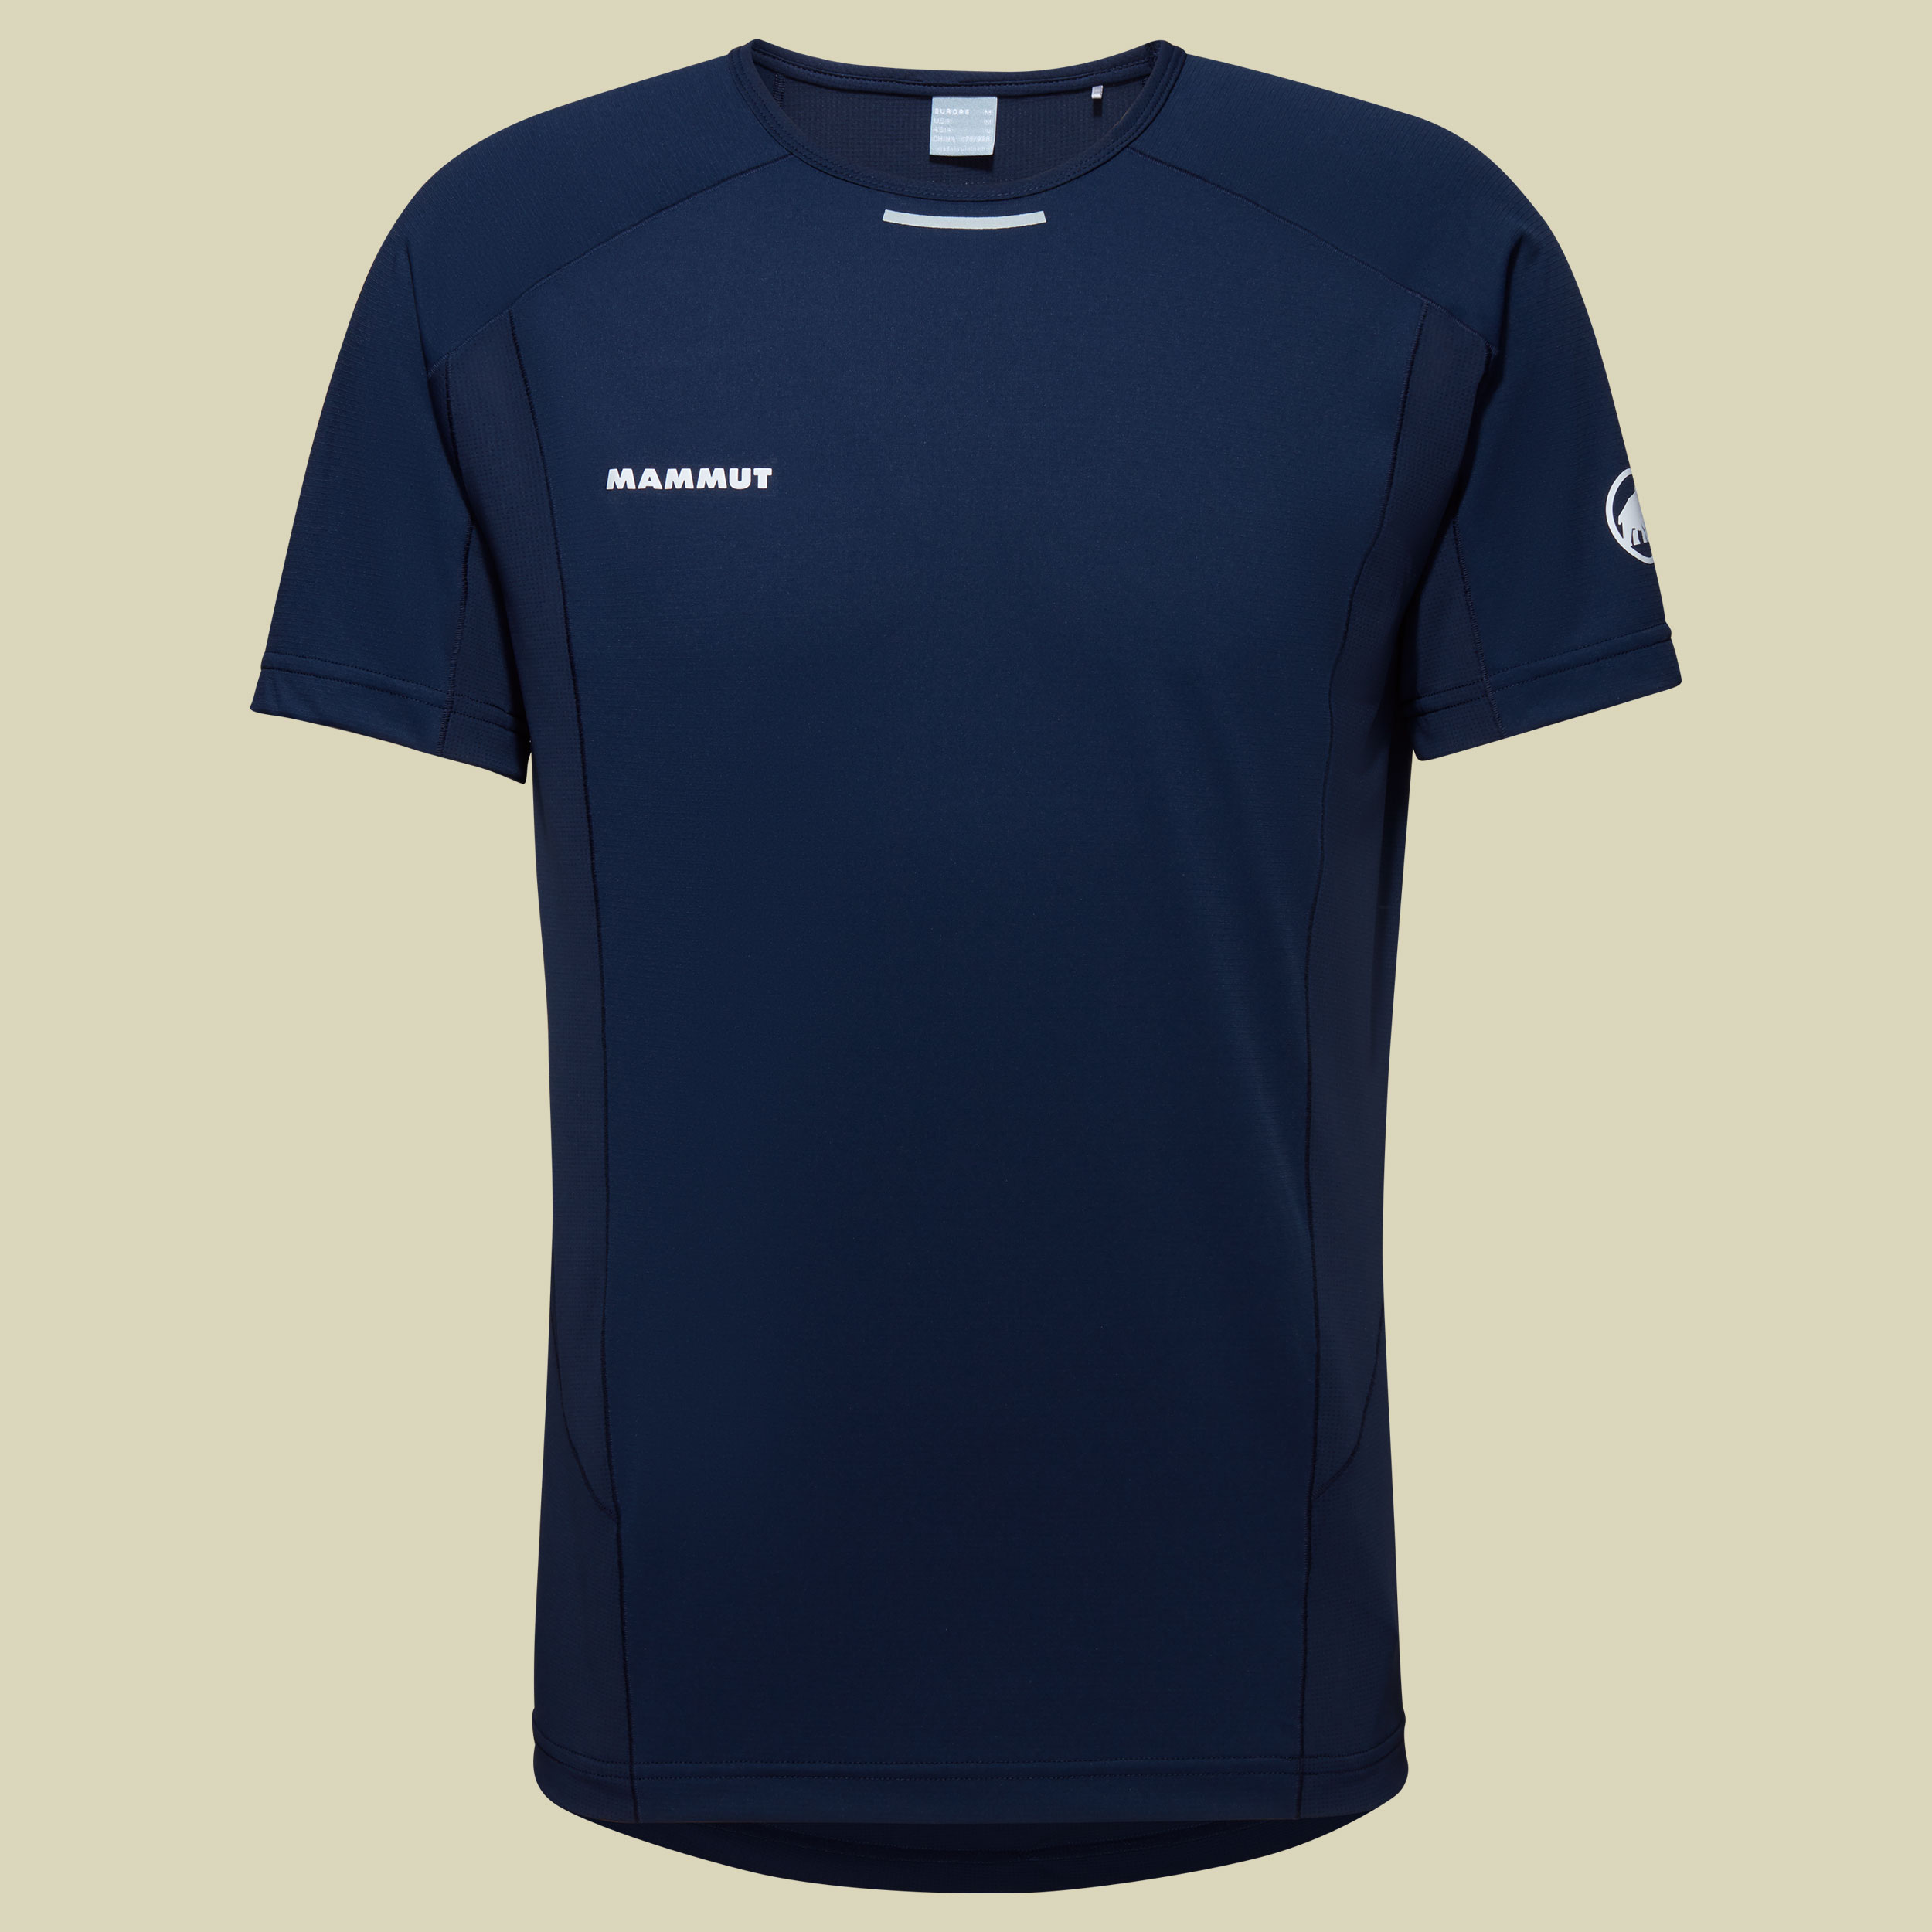 Aenergy FL T-Shirt Men marine XXL